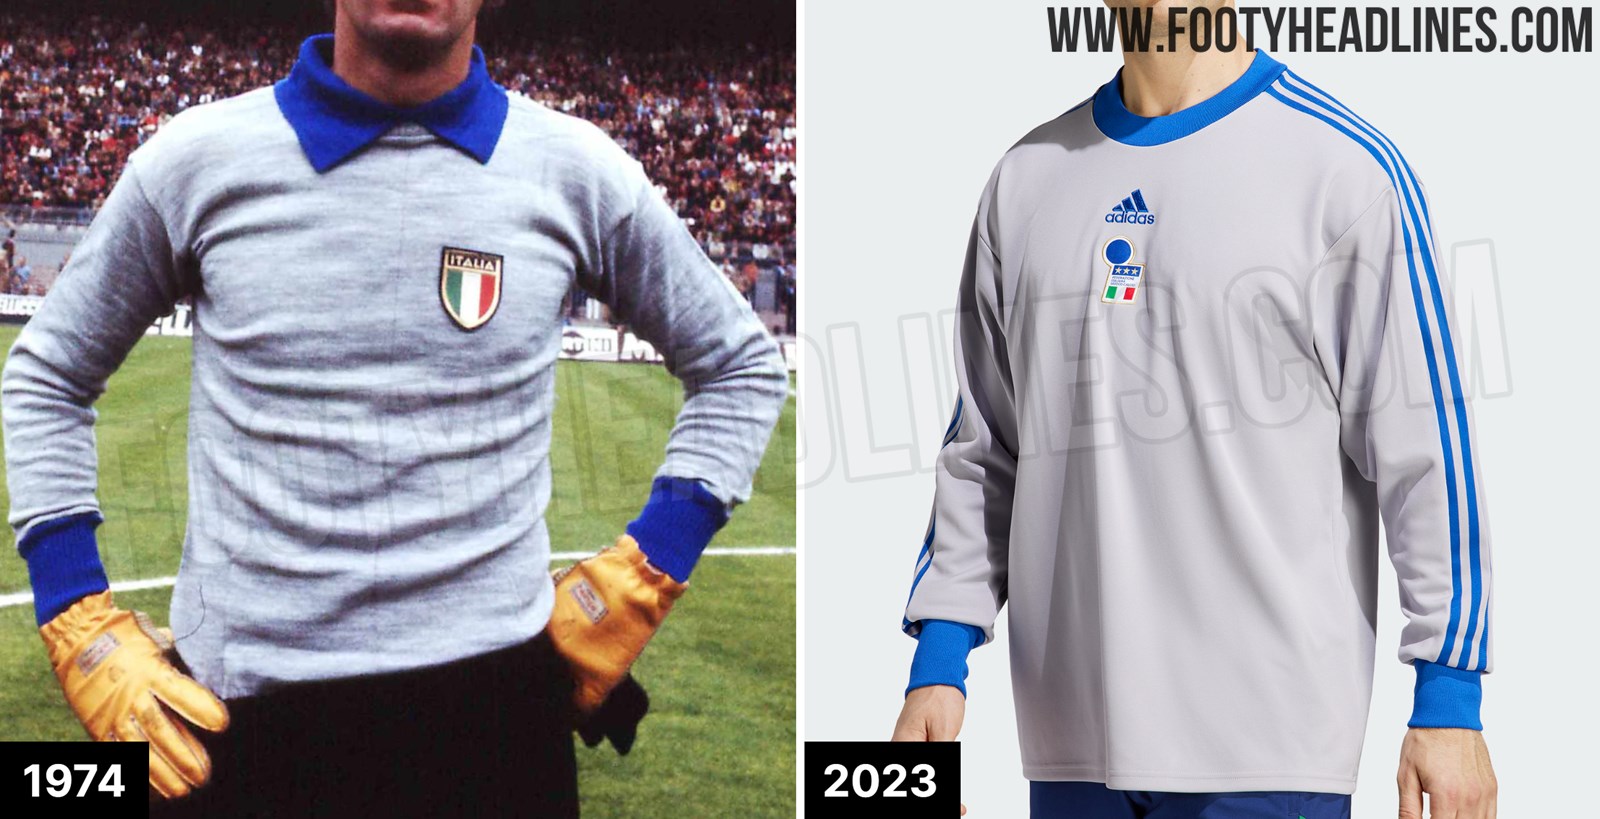 Adidas Italy 2023 Remake Kit Leaked - Return of 1992 Logo - Footy Headlines